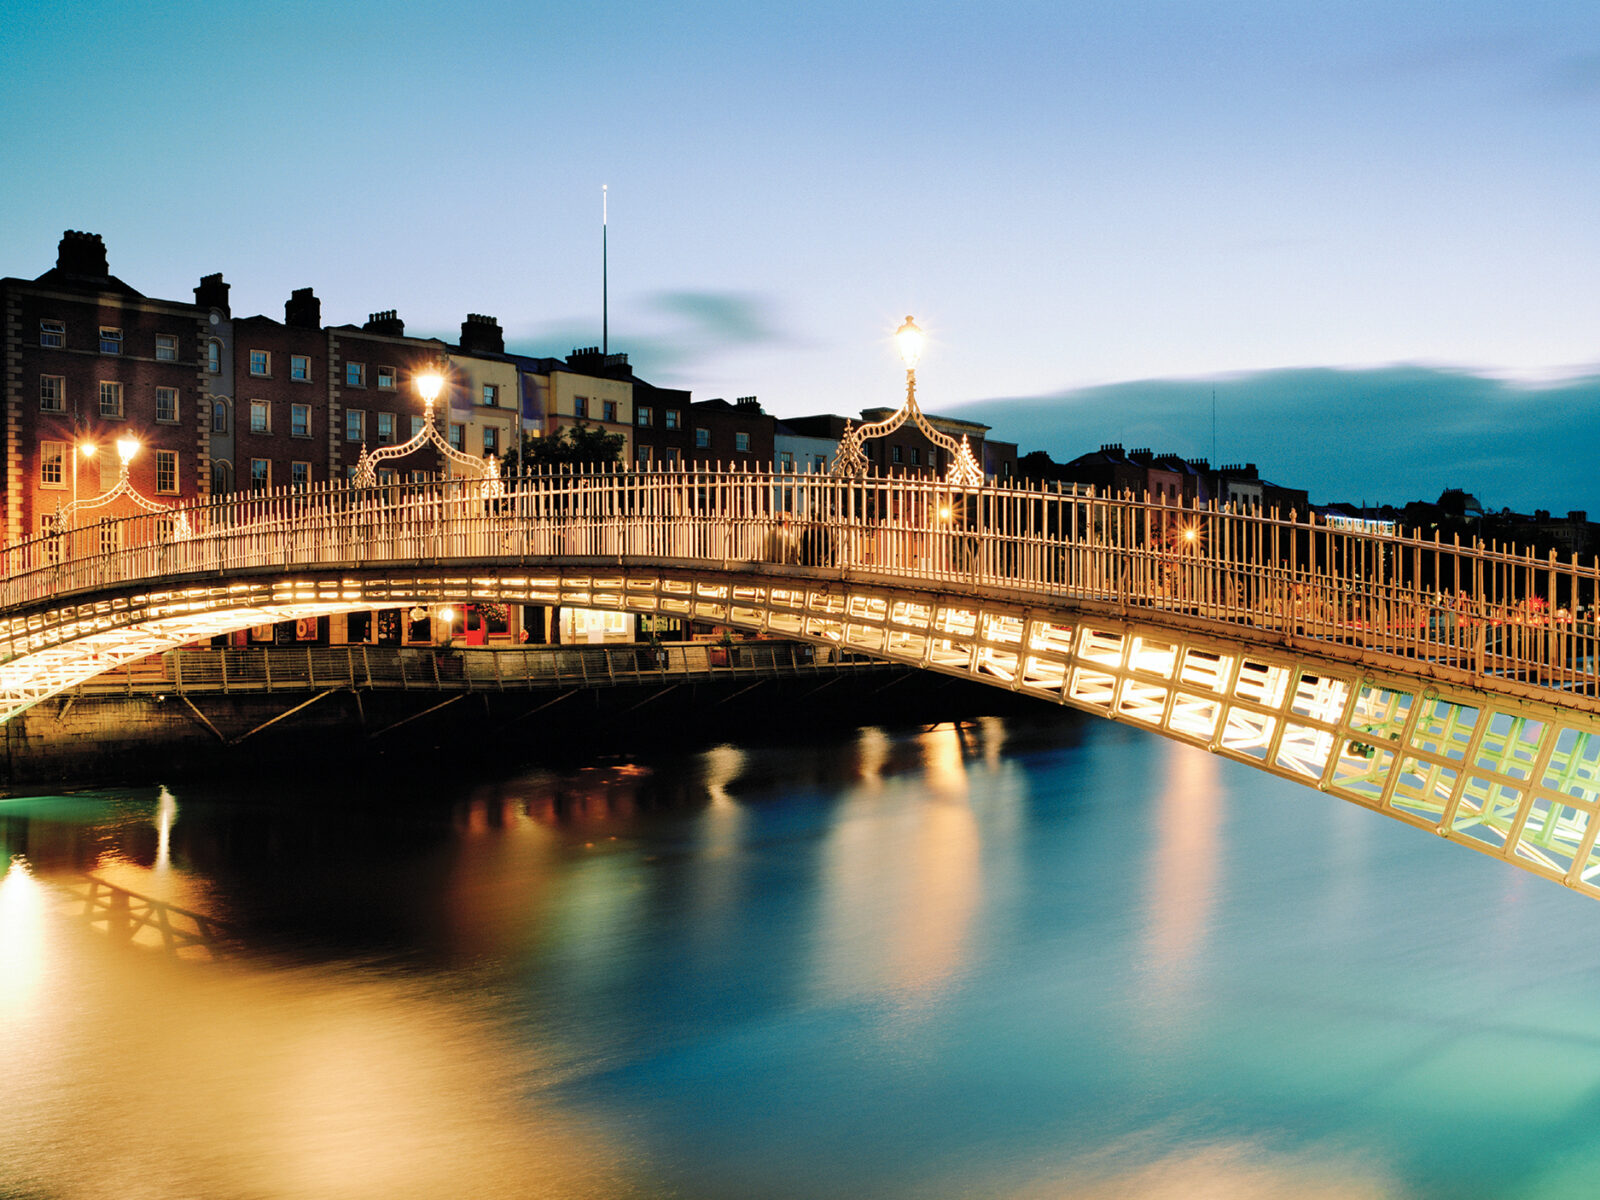 Dublin bridge at night with lights